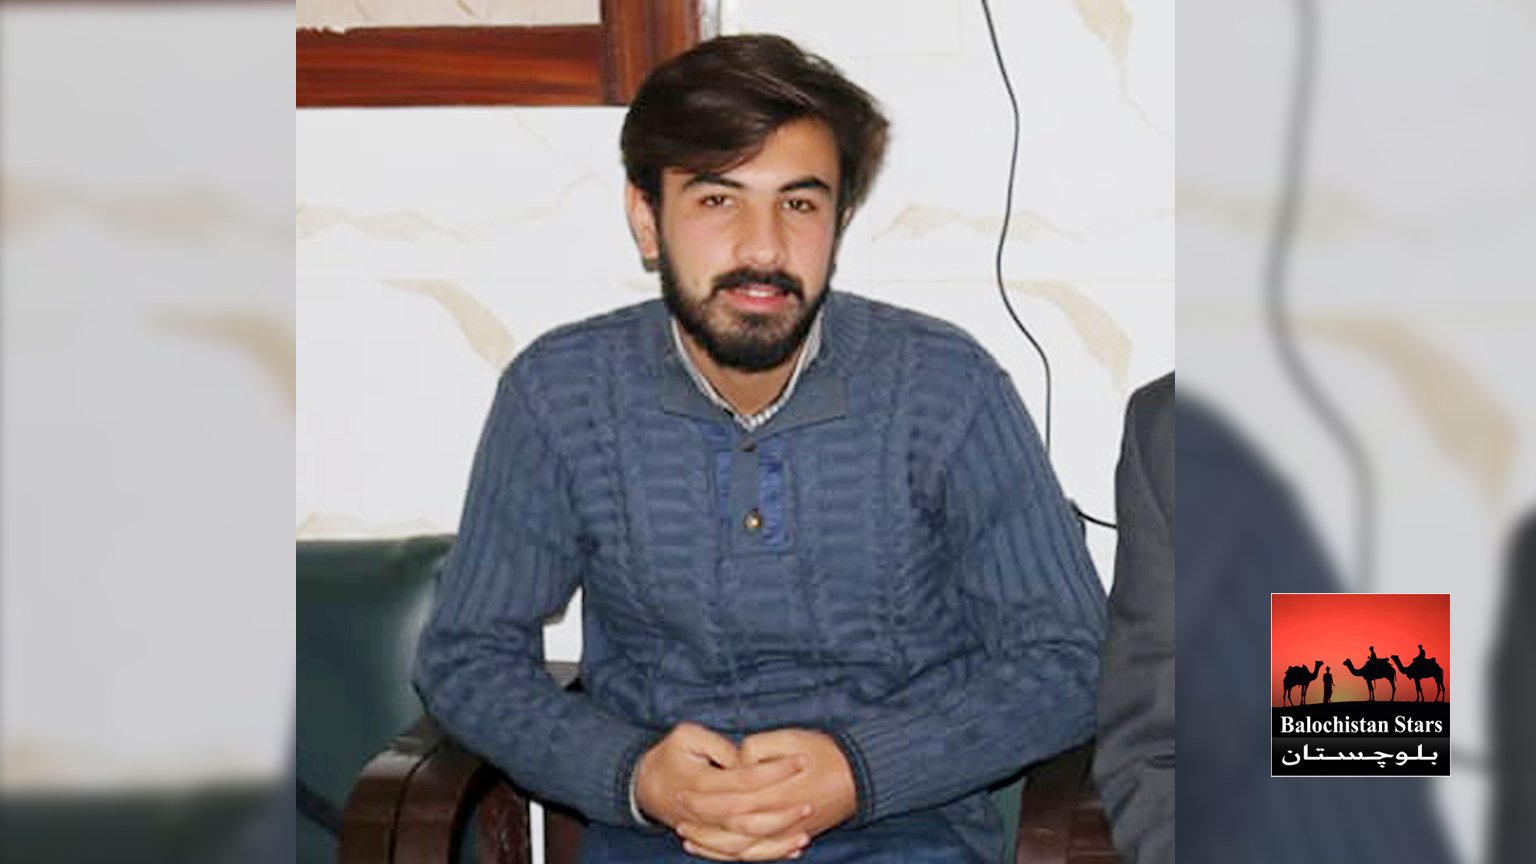 Inayat_Ullah_Achakzai_Sports_One_Journalist_Balochistan_Stars_interview (1)